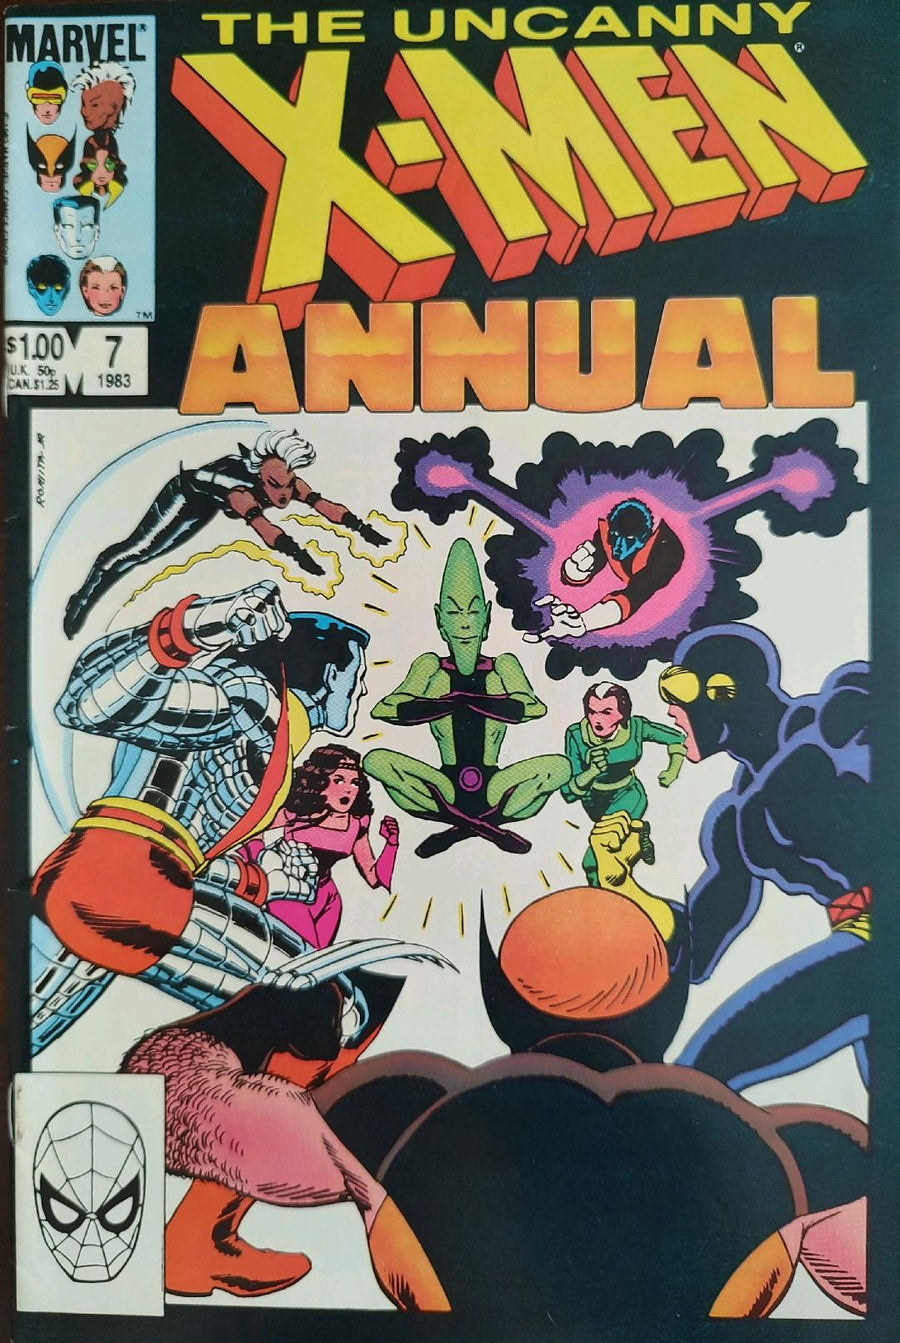 The Uncanny X-Men Annual #7